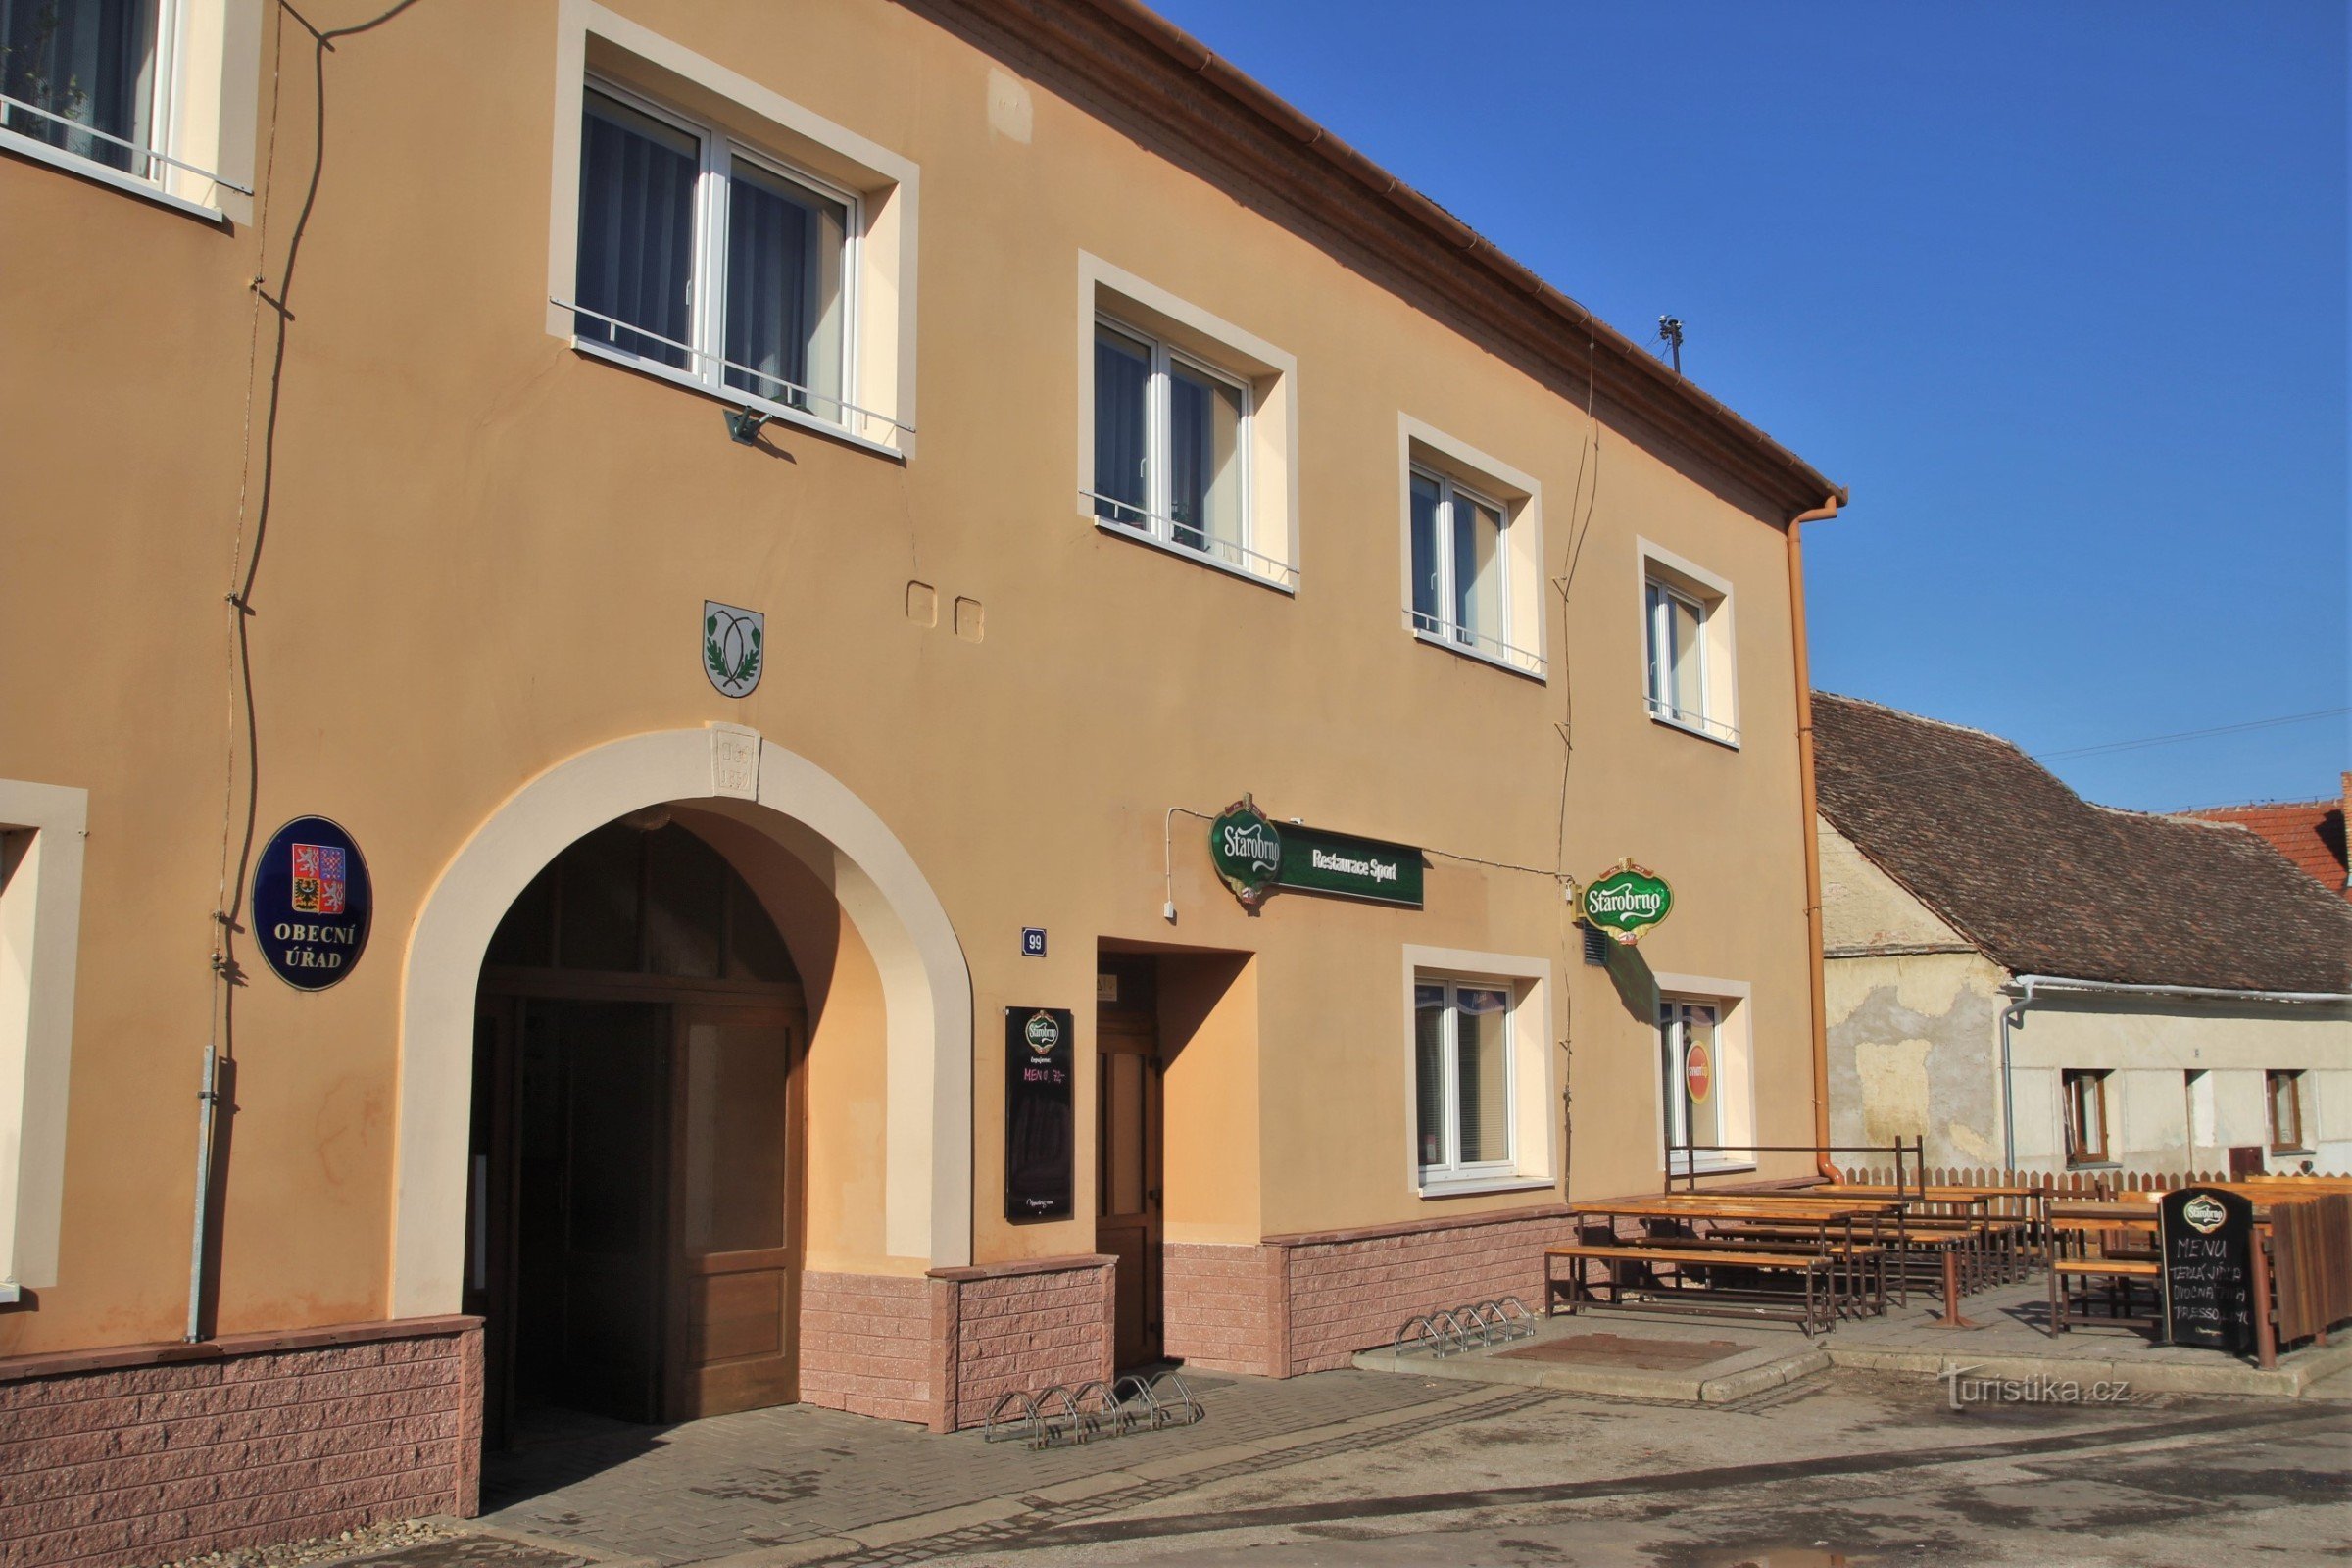 Pouzdřany - municipal office and inn in the village